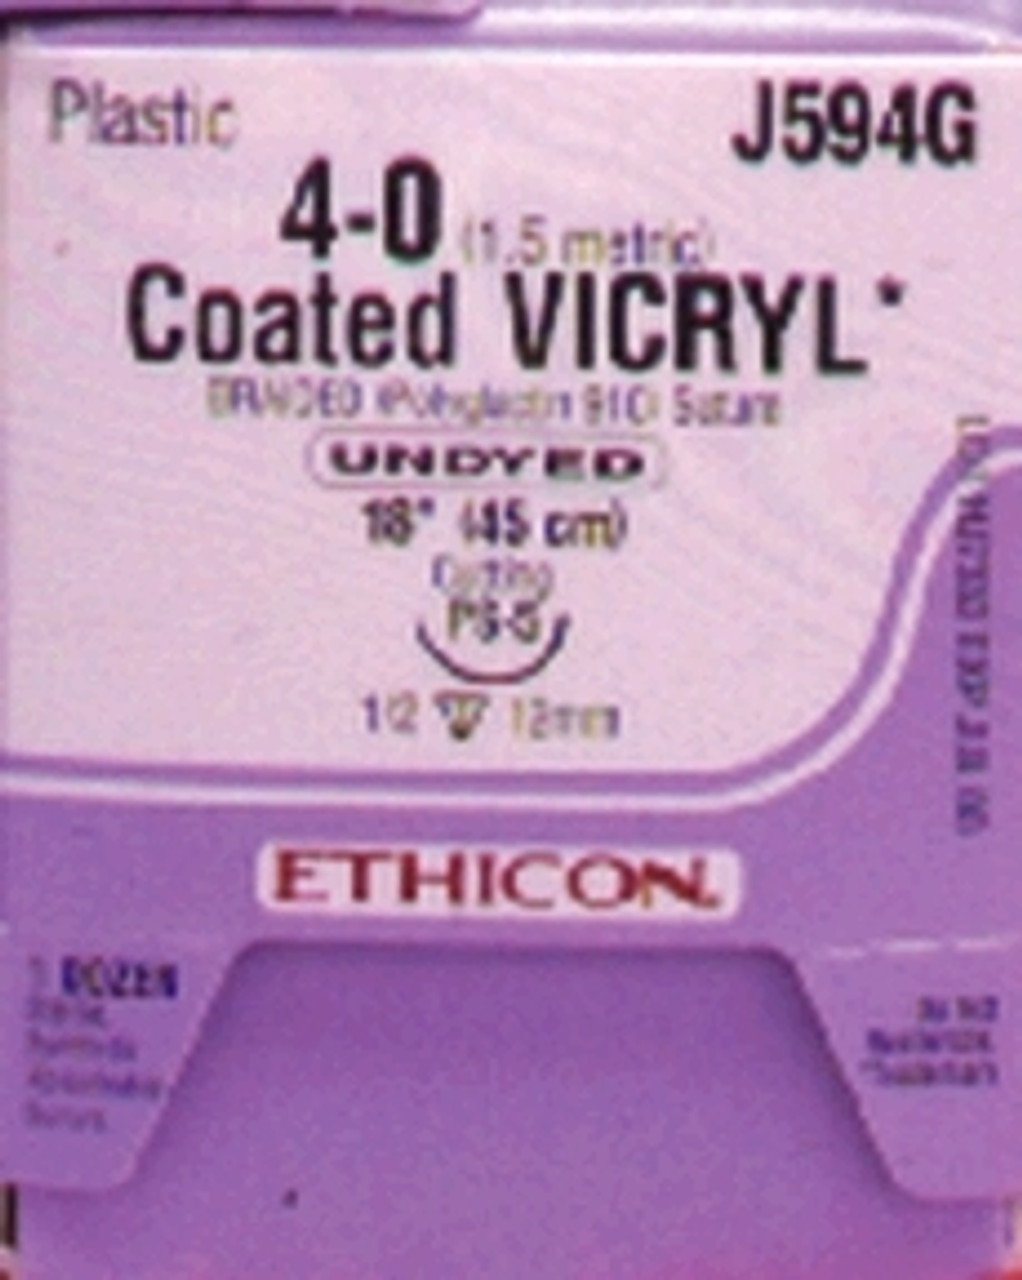 ETHICON VICRYL (POLYGLACTIN 910) SUTURES, J496H